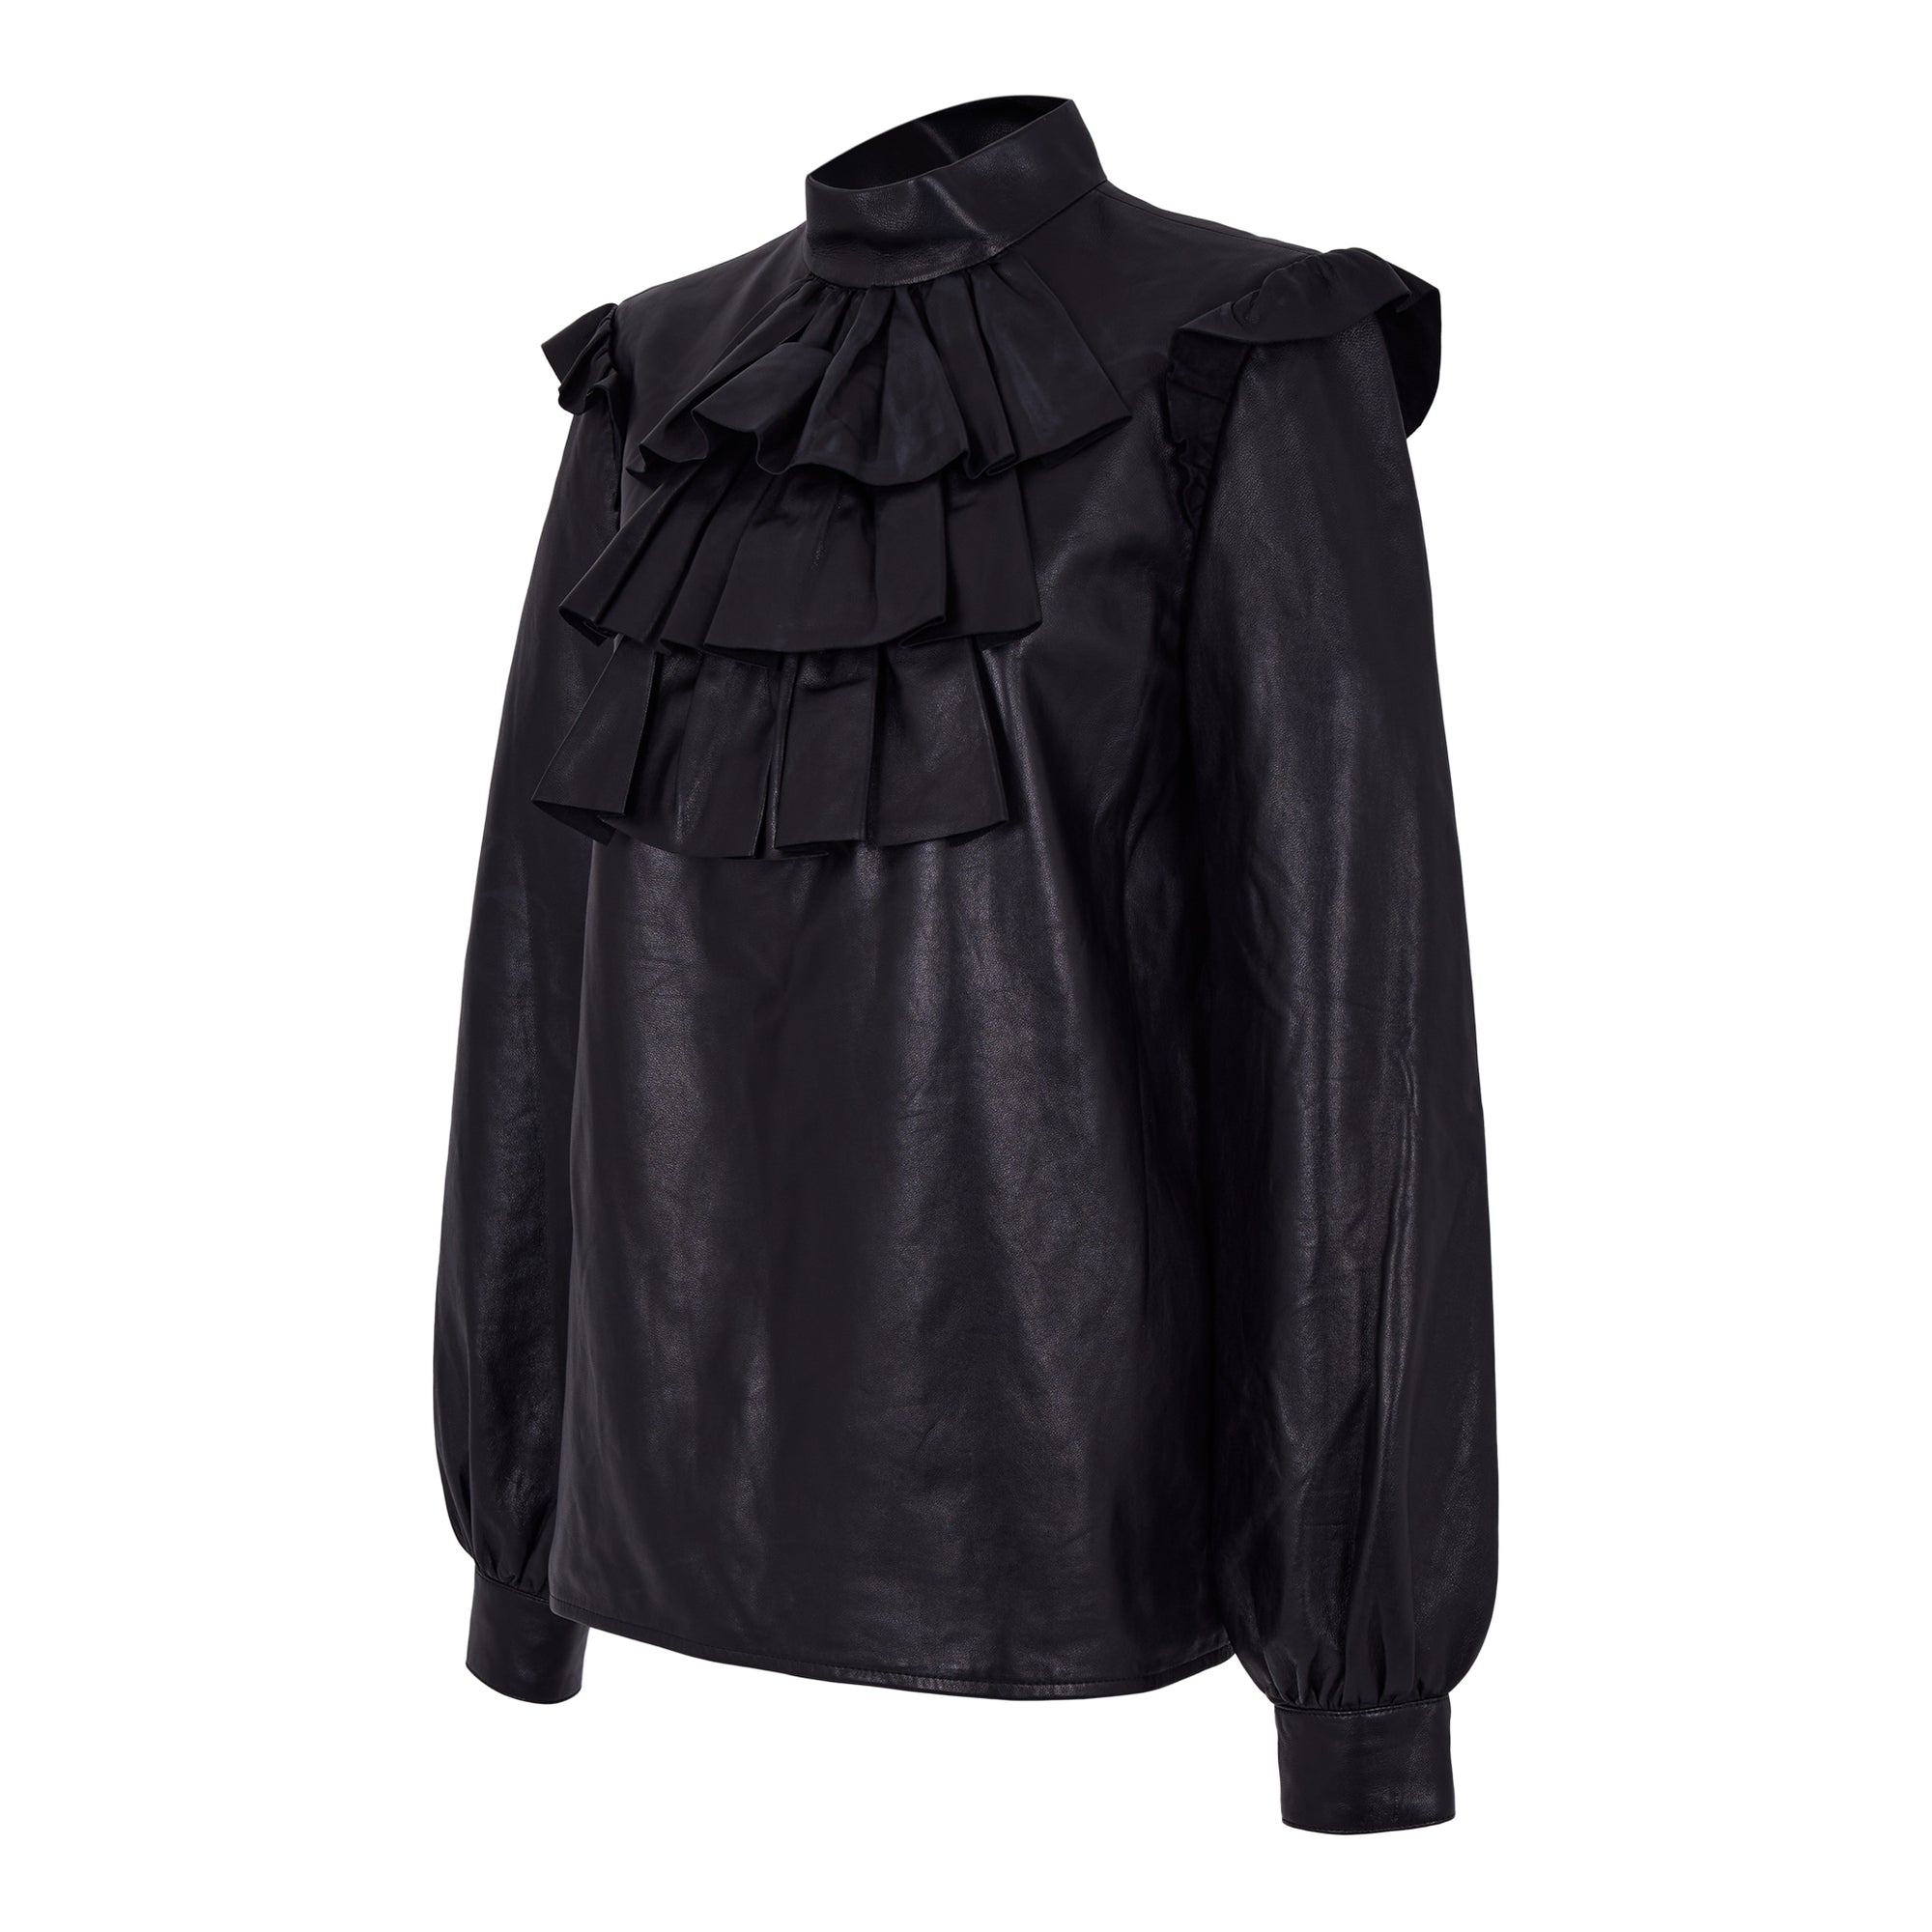 Saint Laurent Black Leather Ruffled Blouse